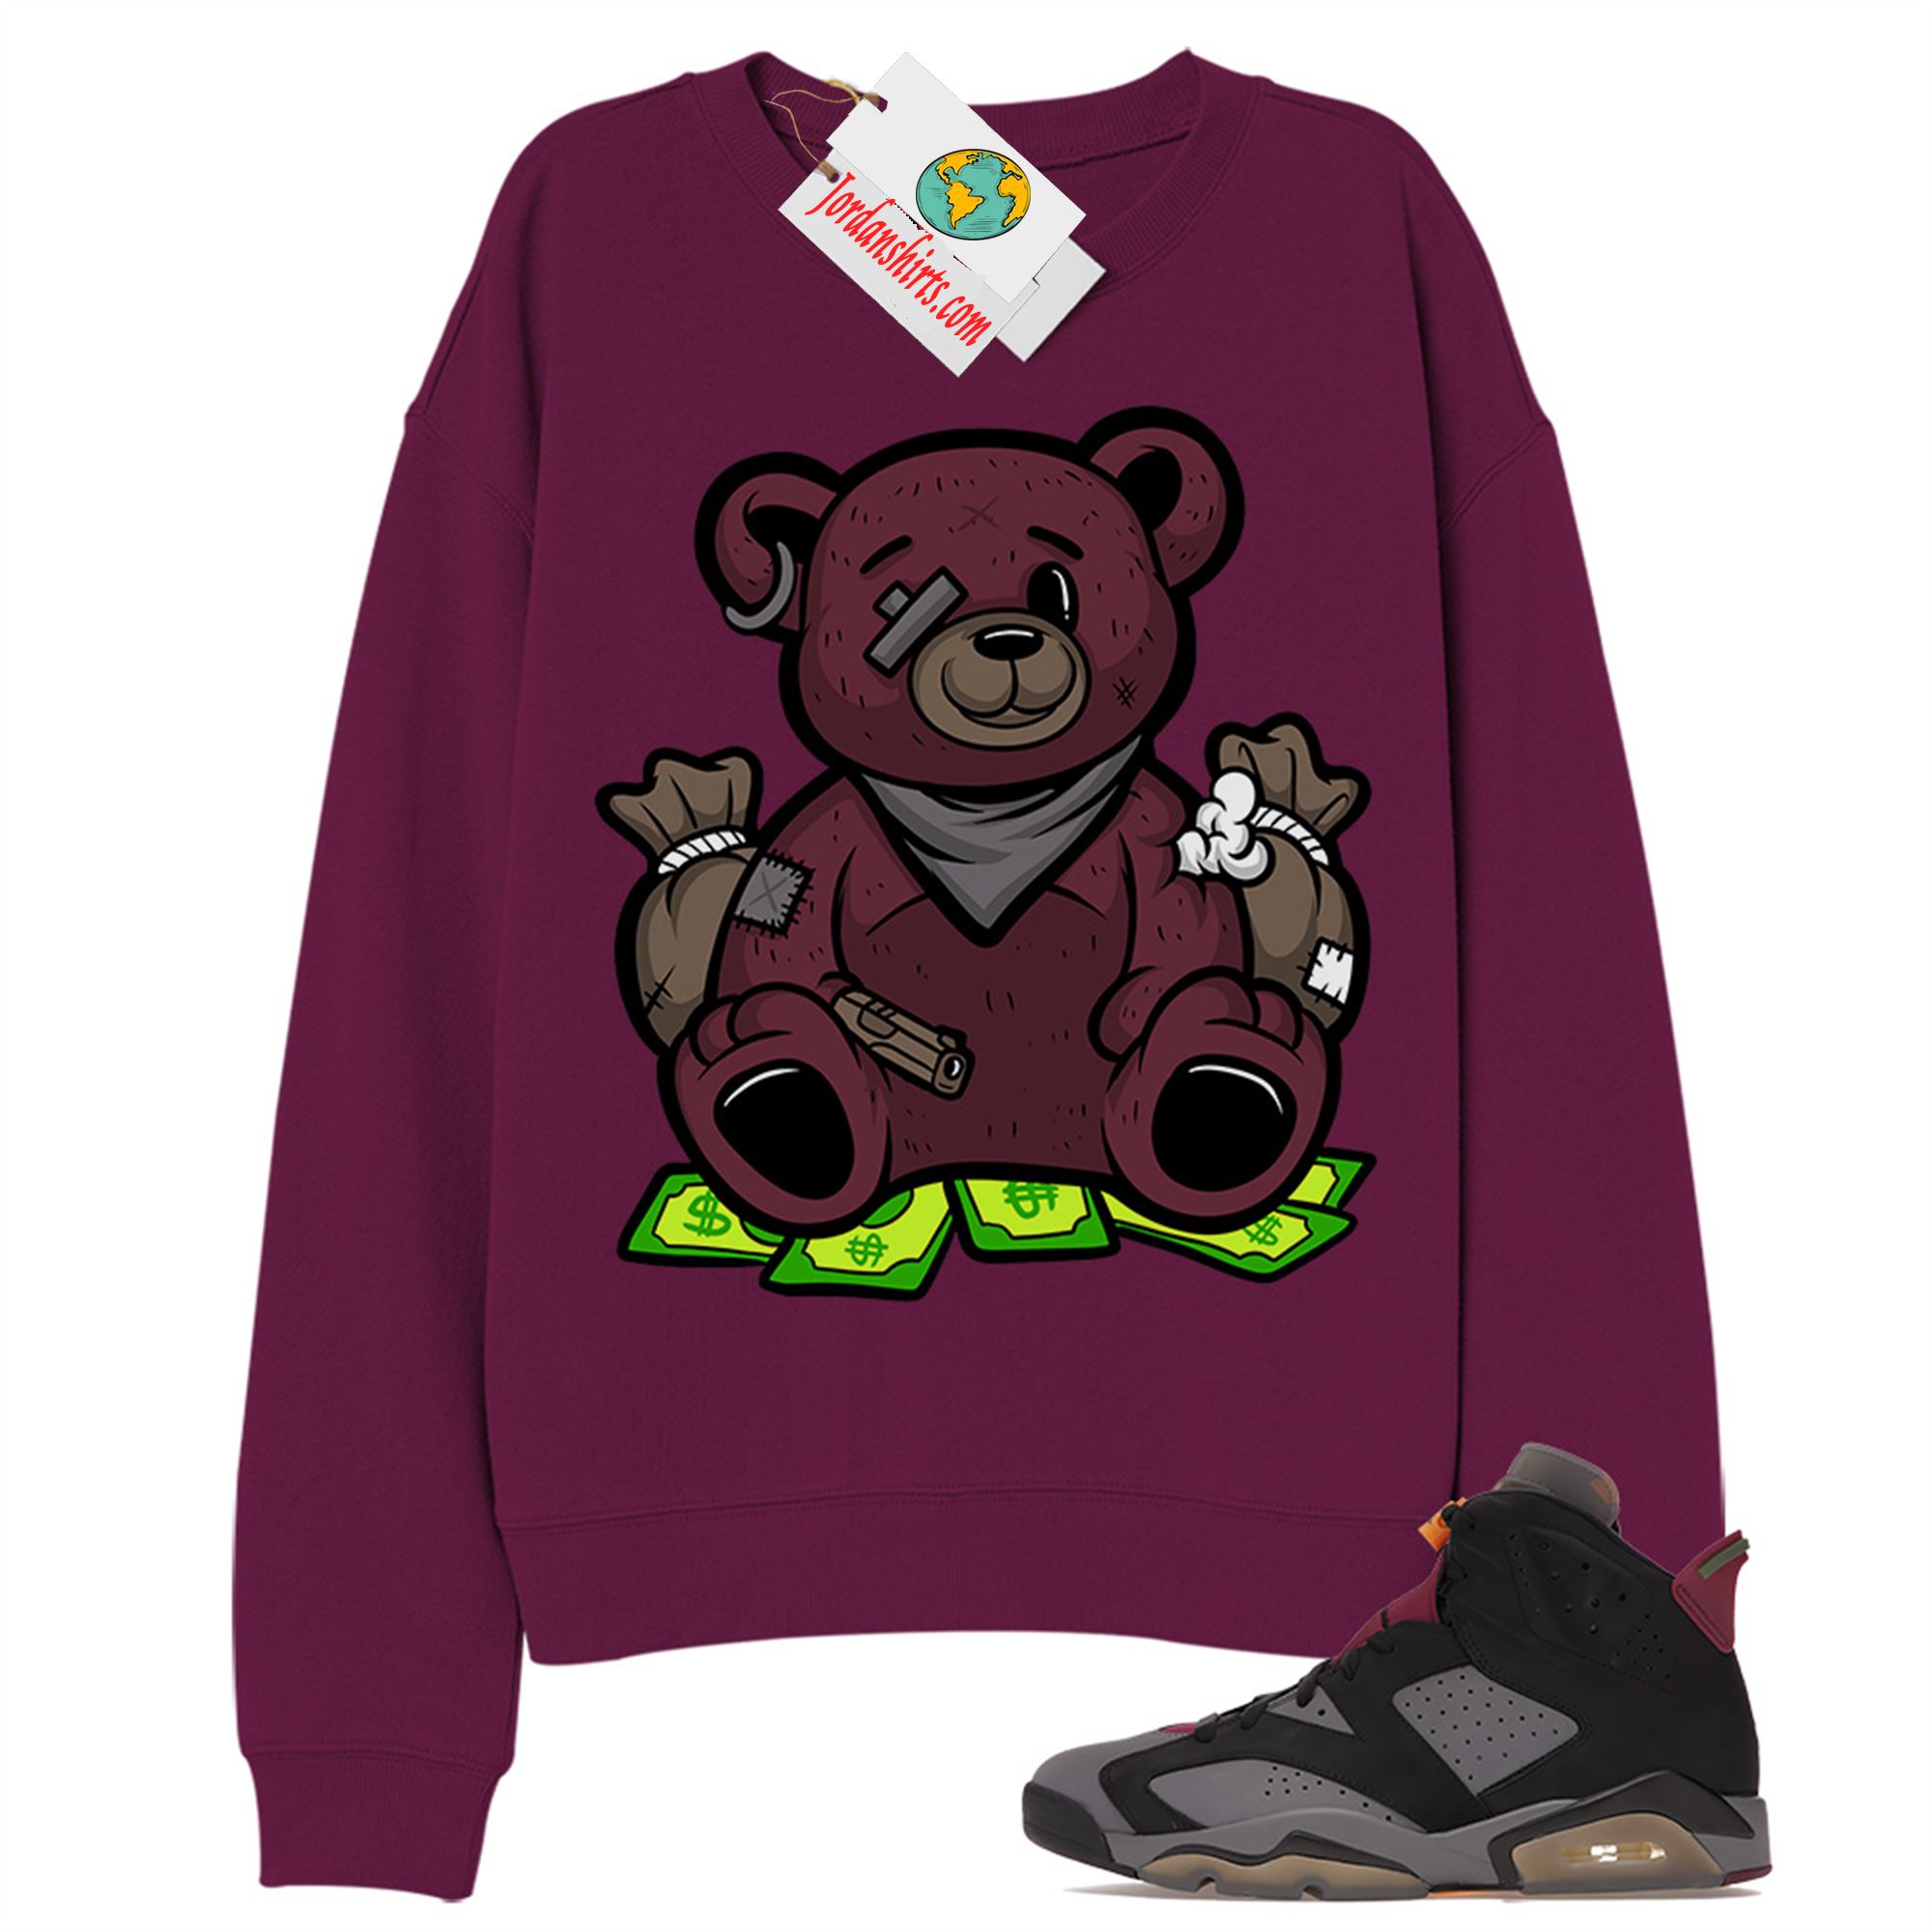 Jordan 6 Sweatshirt, Rich Teddy Bear Gangster Maroon Sweatshirt Air Jordan 6 Bordeaux 6s Plus Size Up To 5xl